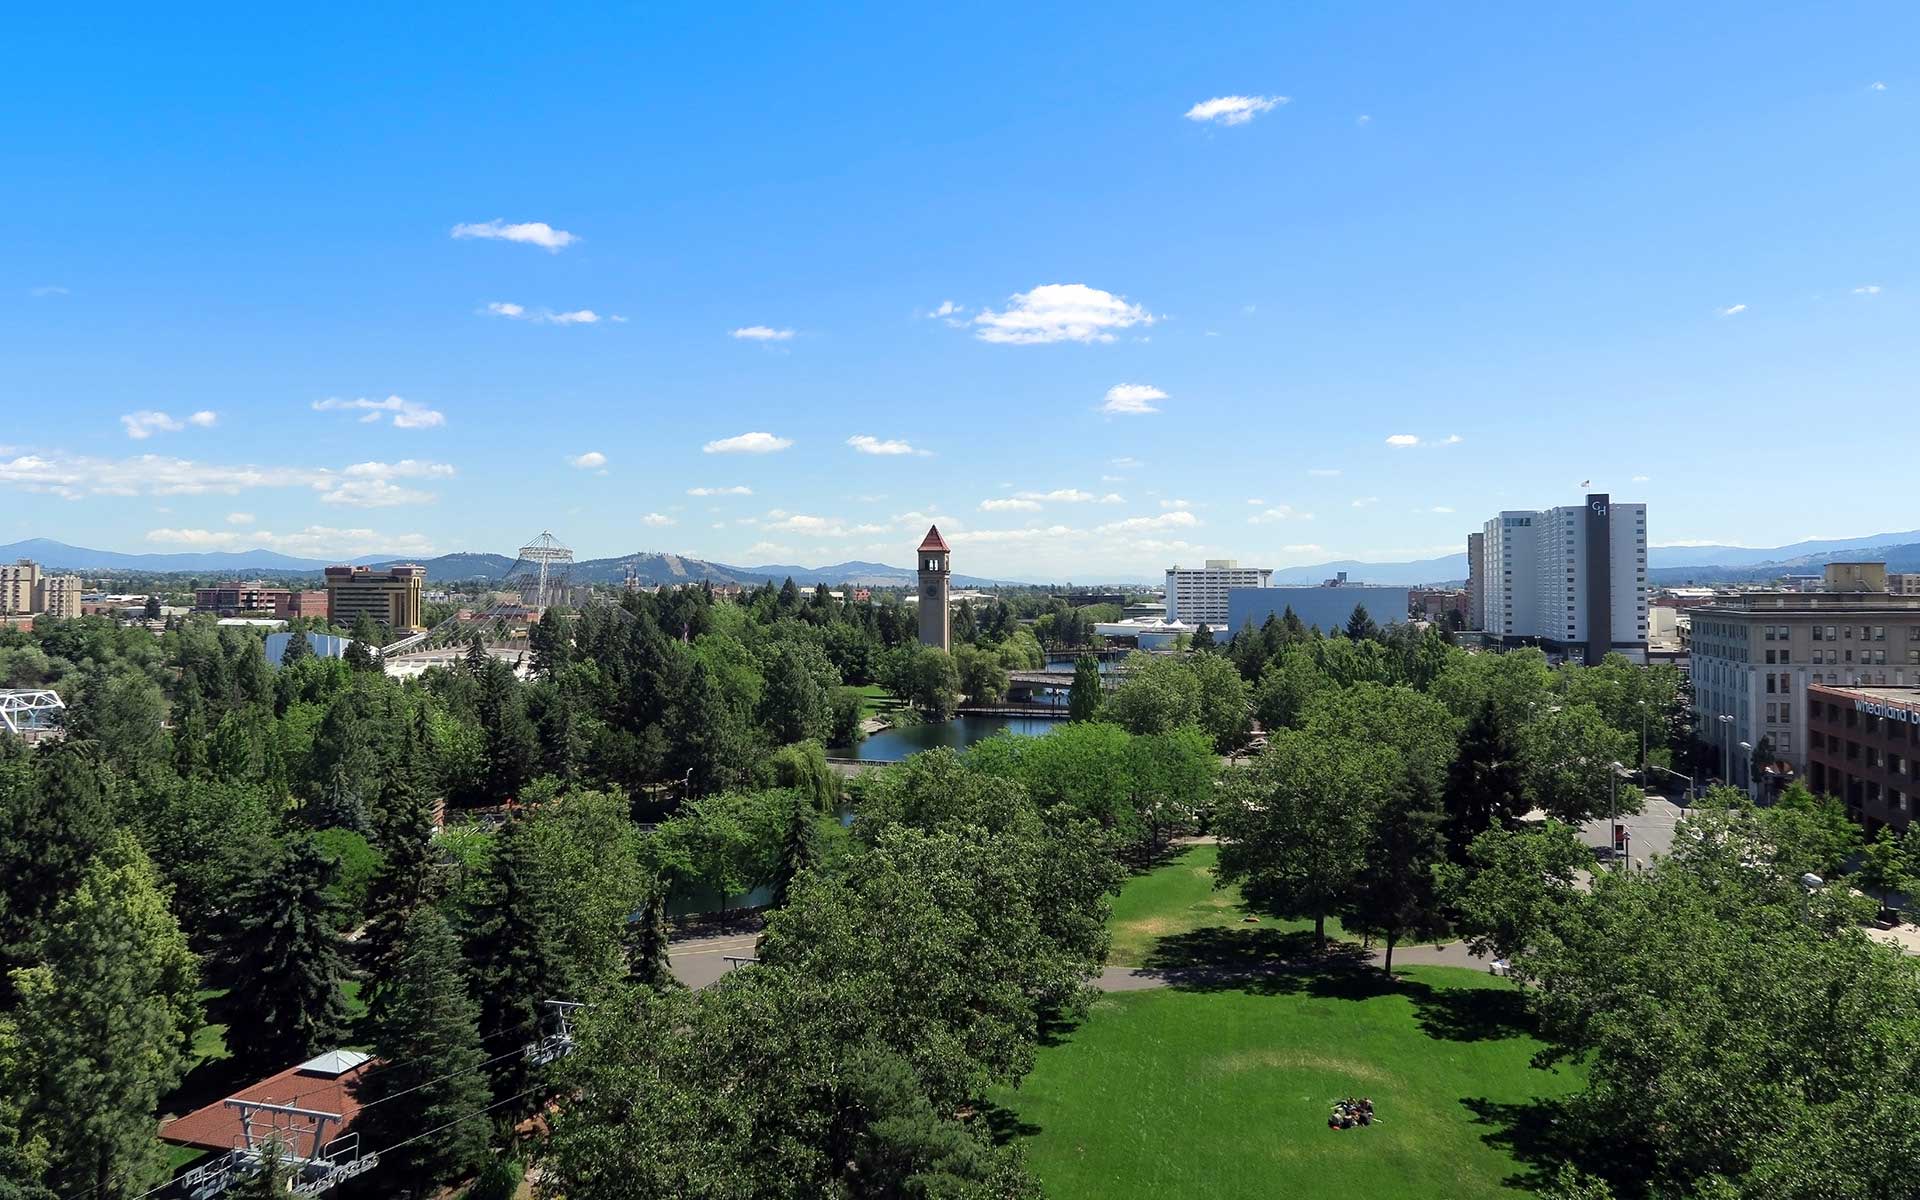  City of Spokane Celebrates Earth Day 